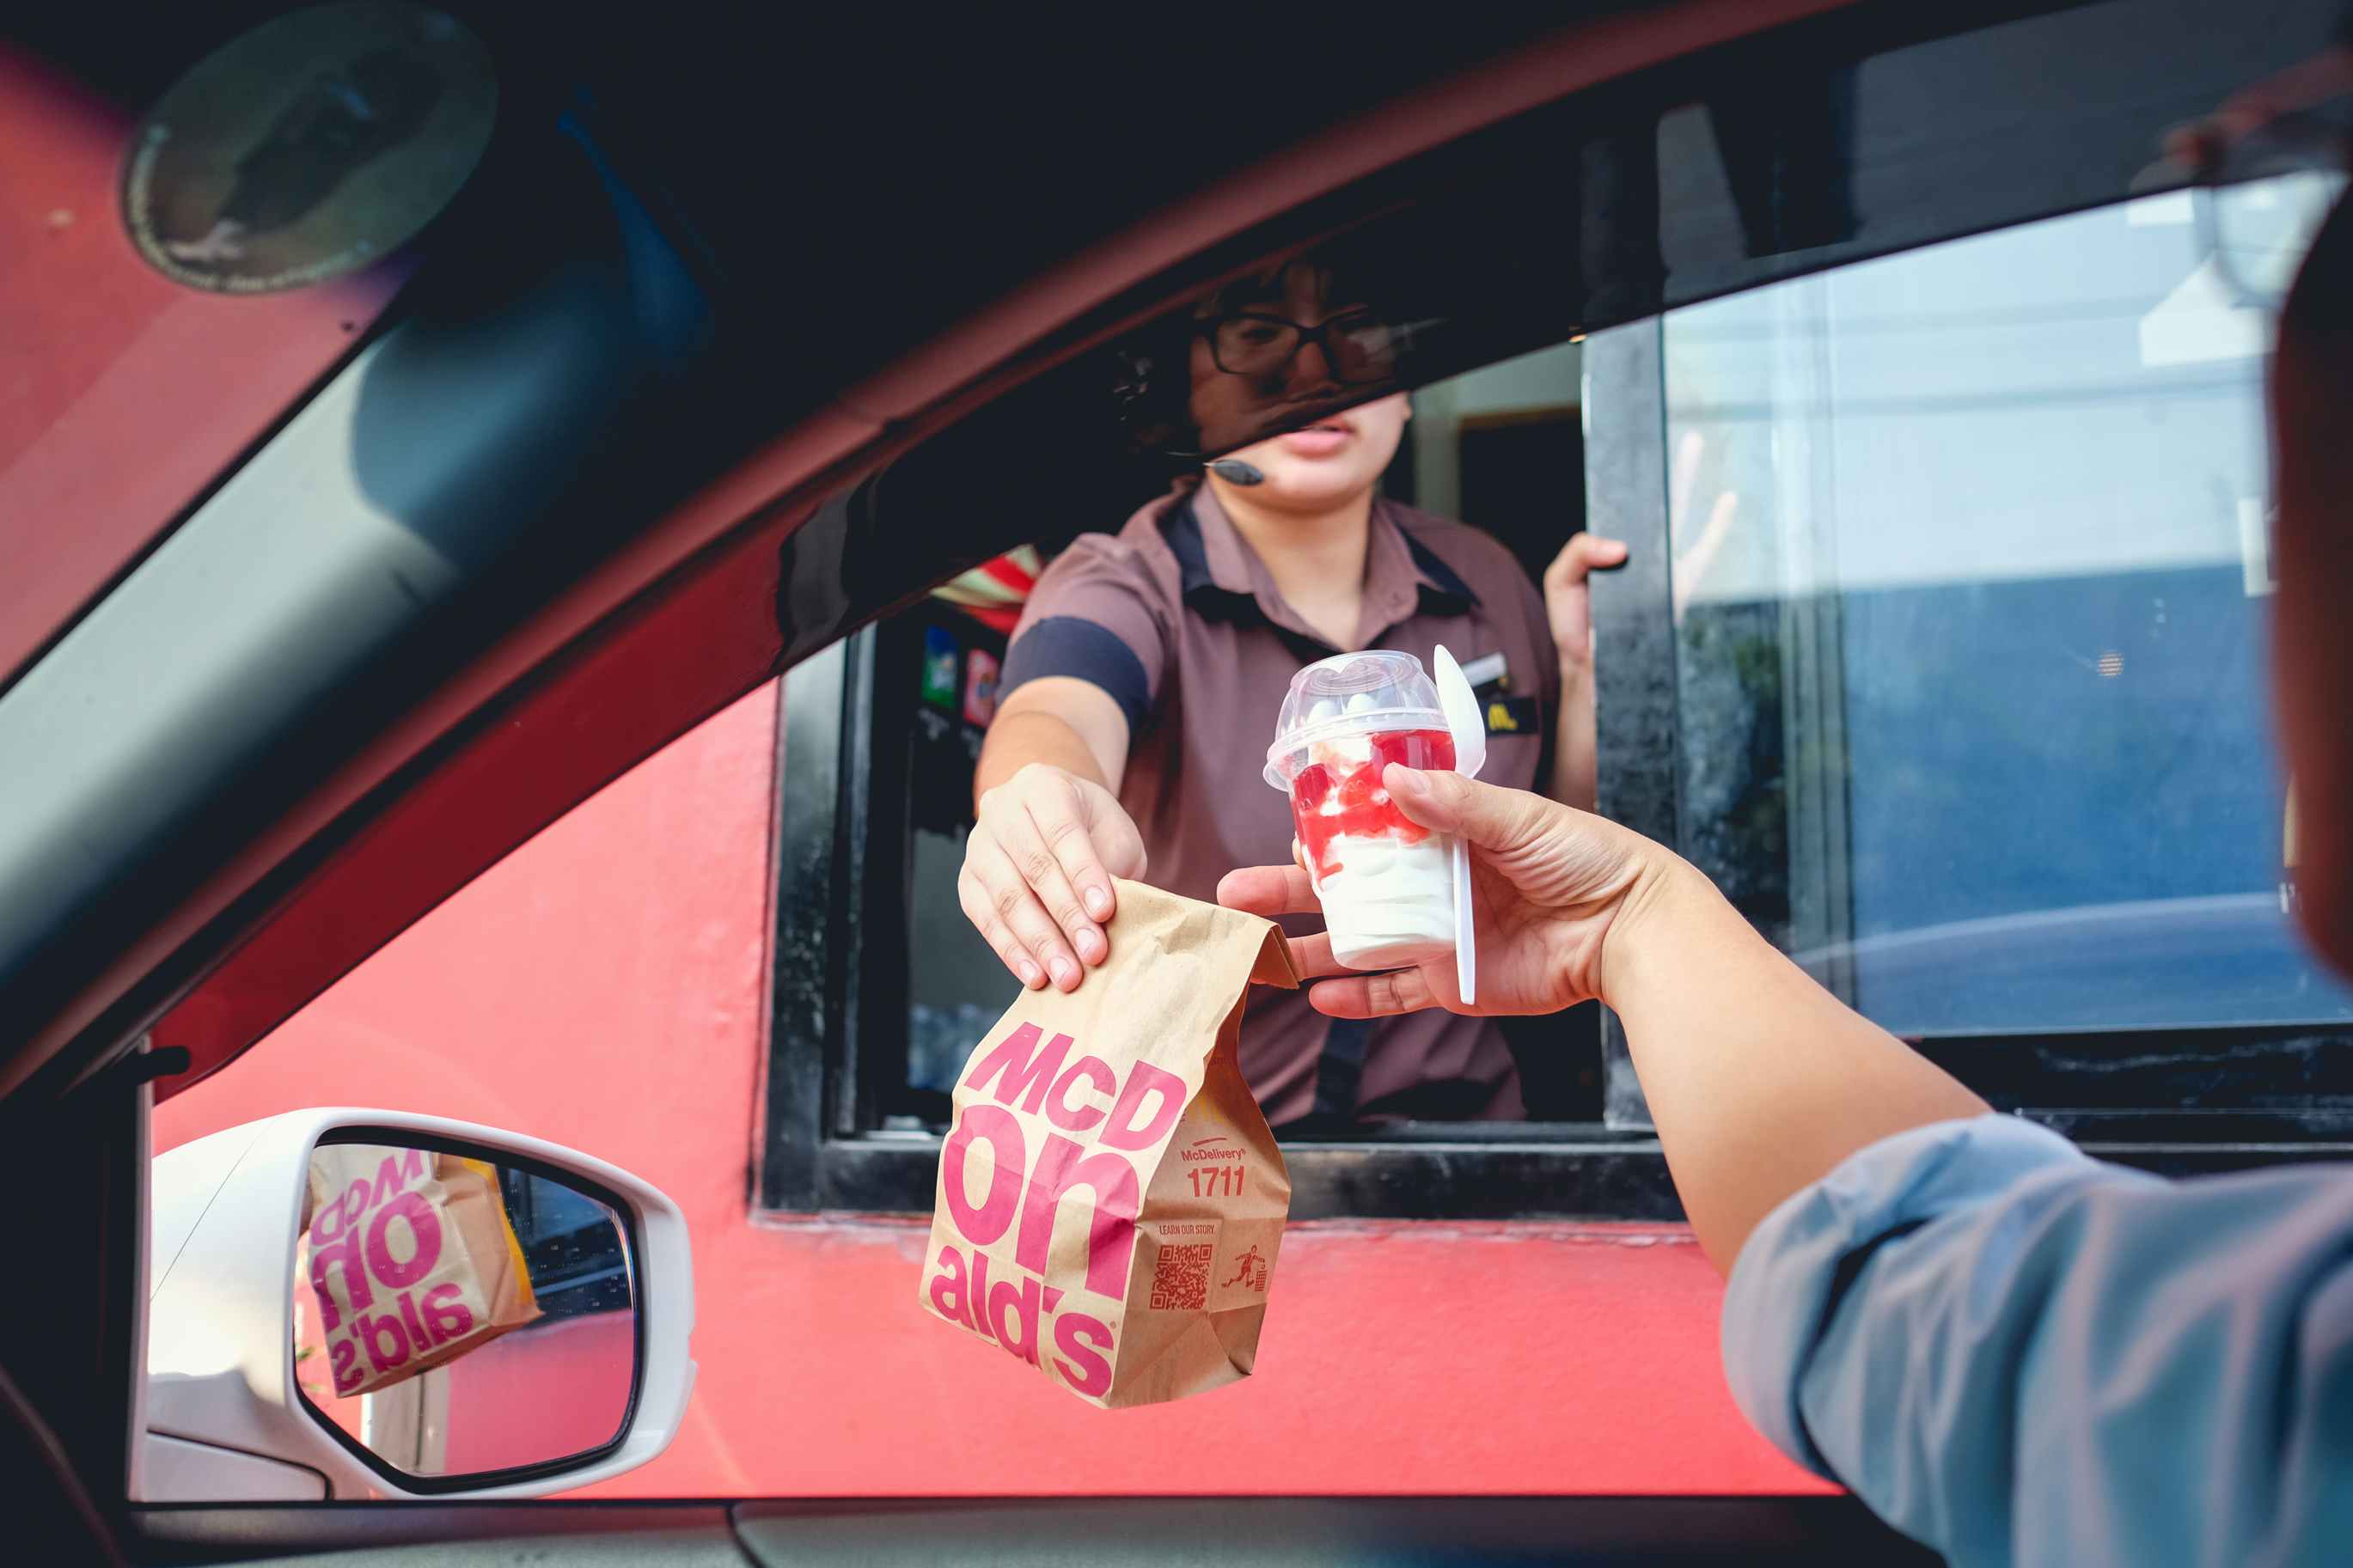 mcdonalds drive-thru employee handing driver food through window